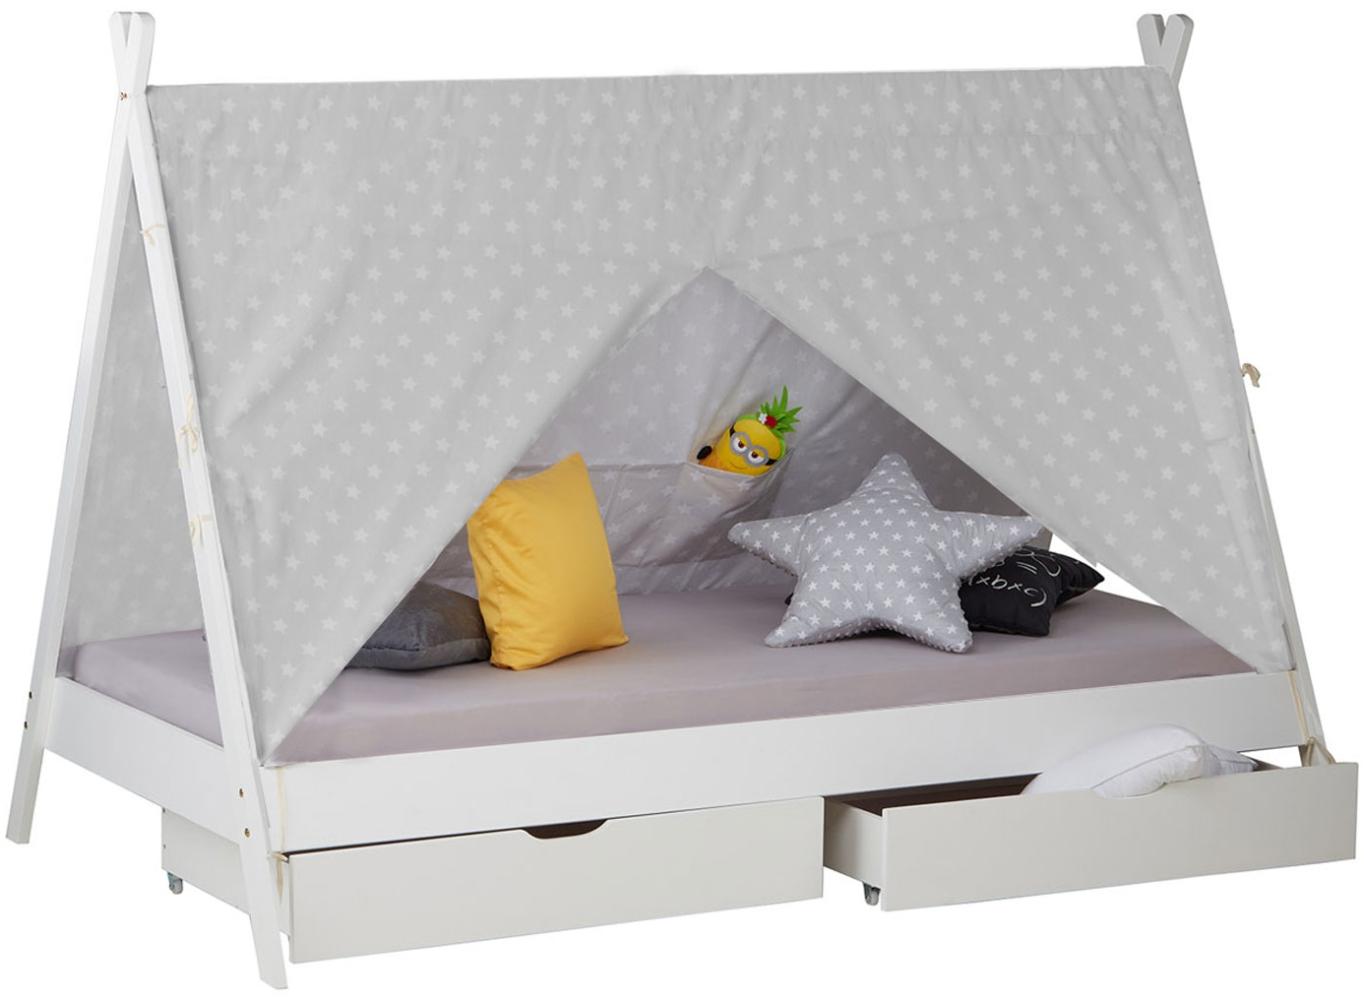 Homestyle4u 'TIPI' Kinderbett, weiß/grau, 90x200 cm, inkl. 2 Bettkästen, Lattenrost und Stoffüberwurf, Kiefernholz Bild 1